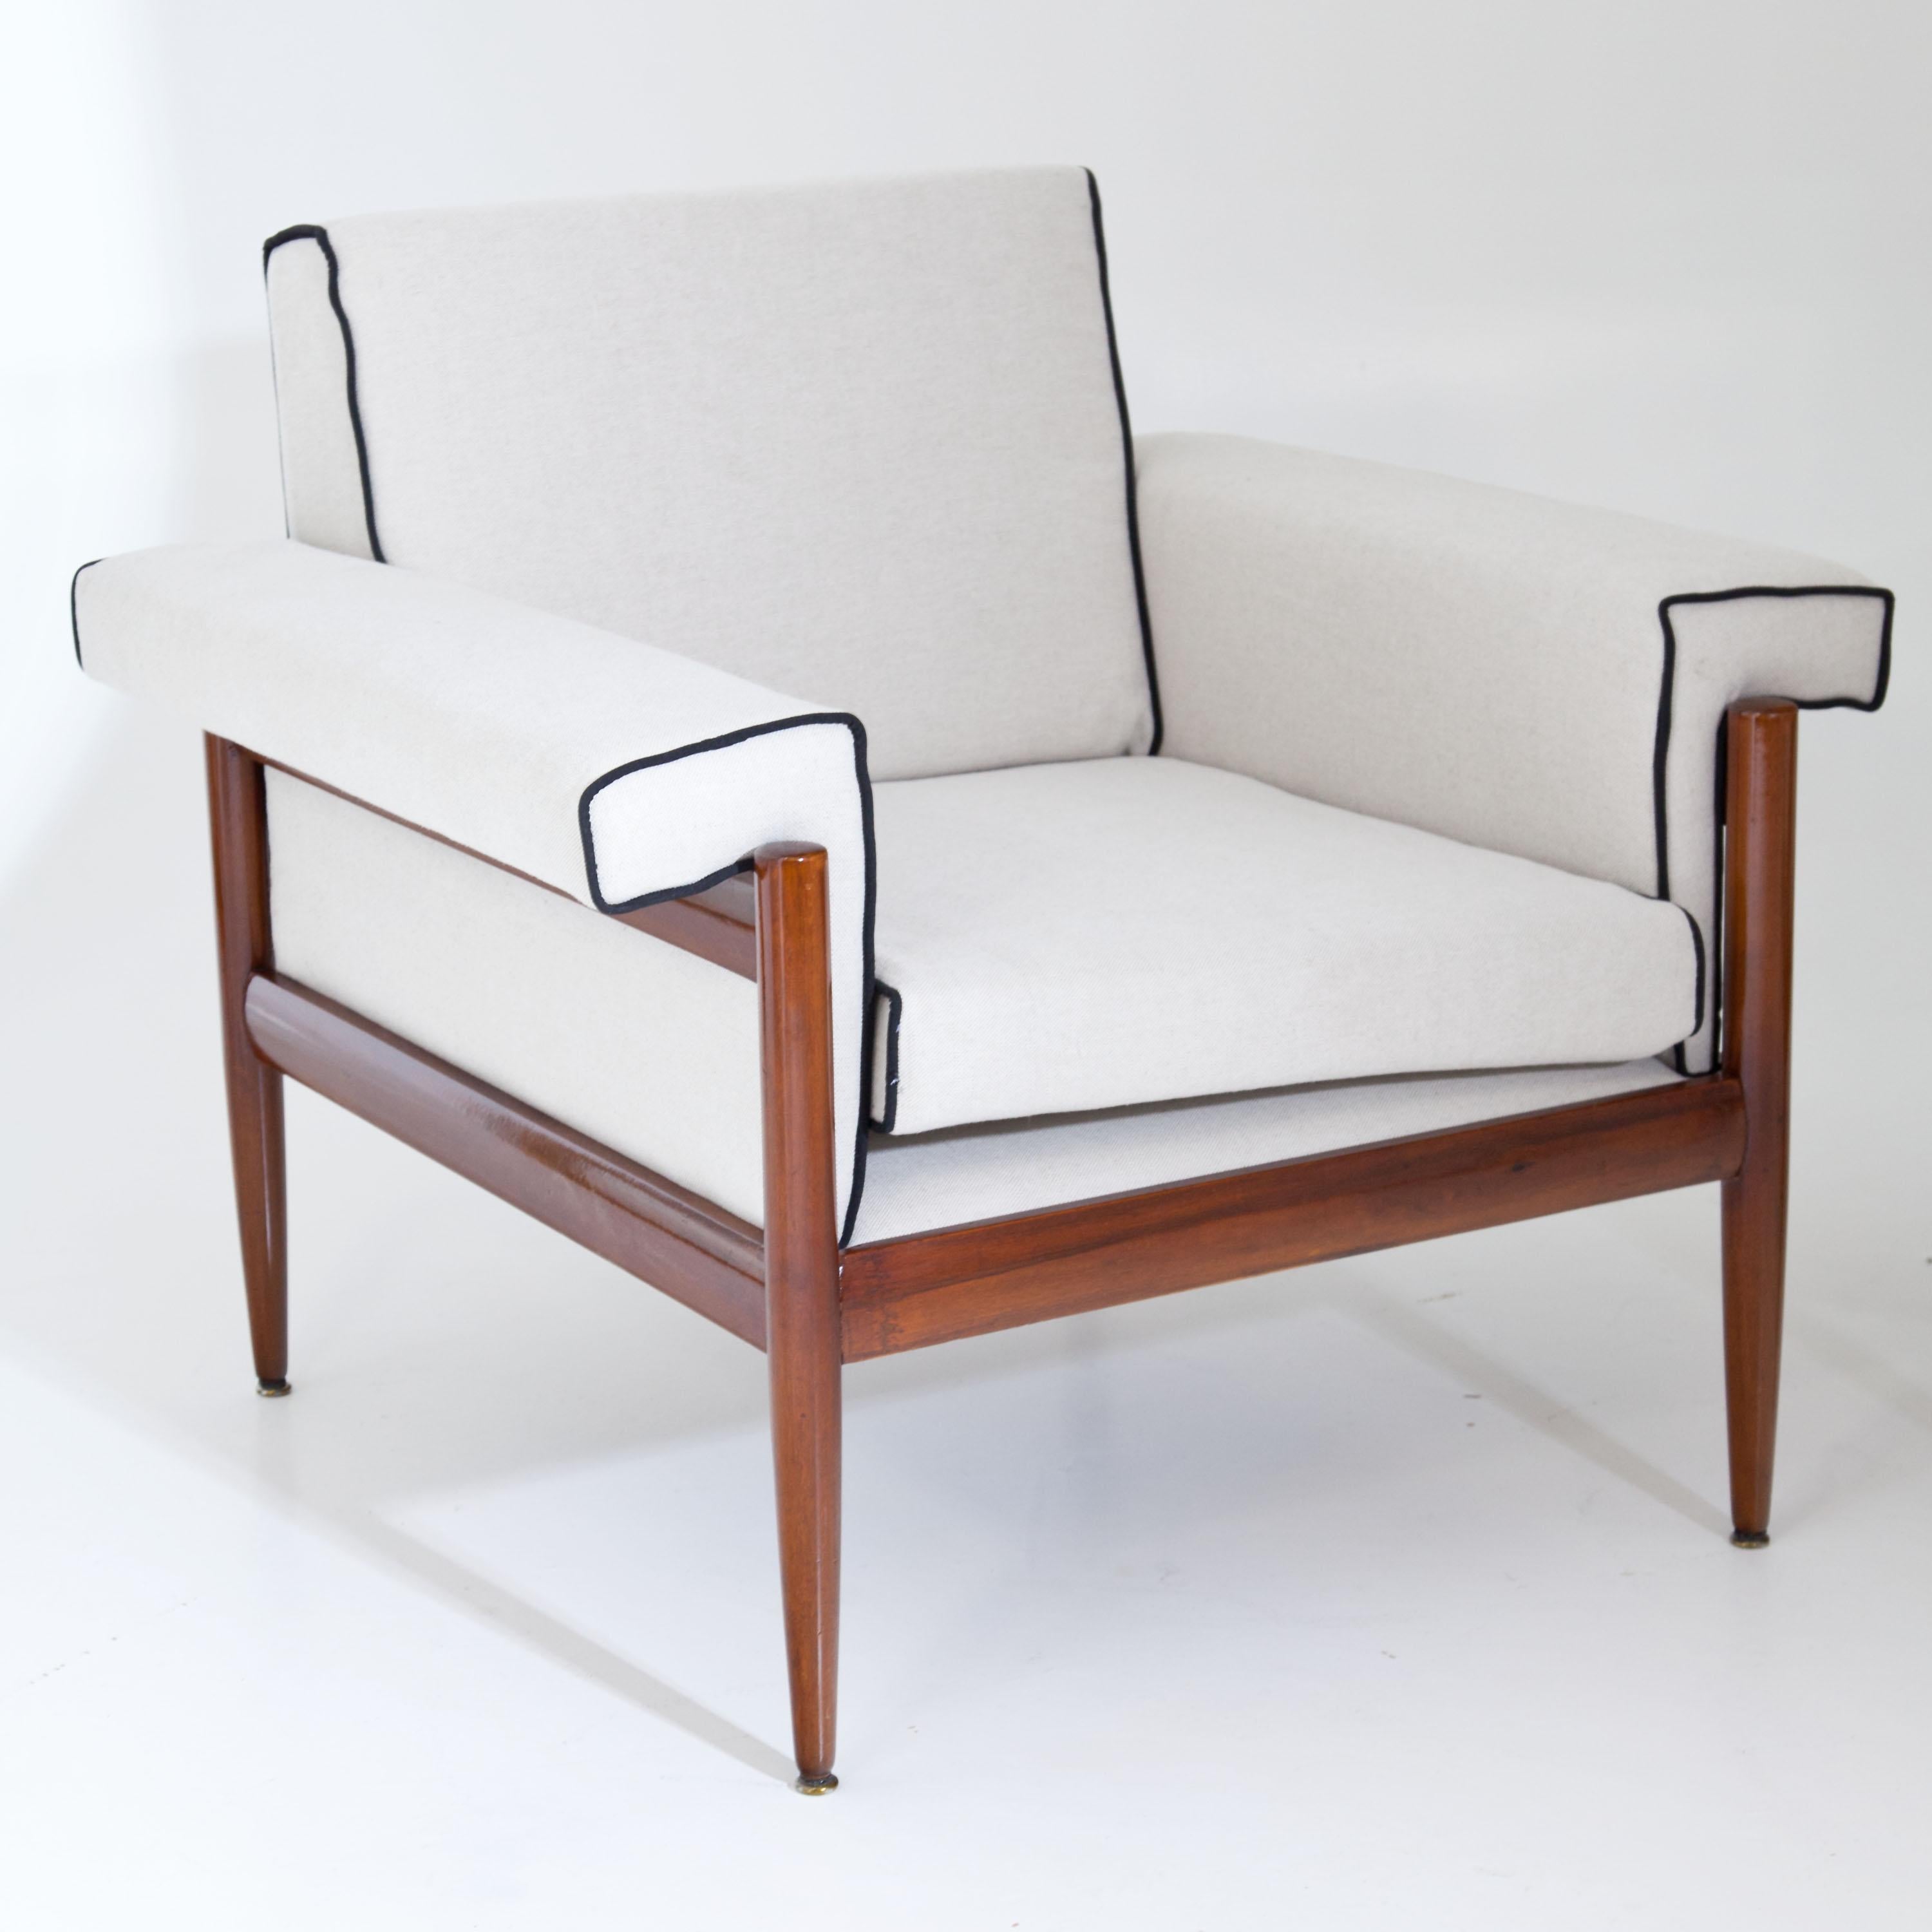 Mid-Century Modern Pair of Italian Design Lounge Chairs, Trafilisa Isa Bergamo, Italy 1950s For Sale